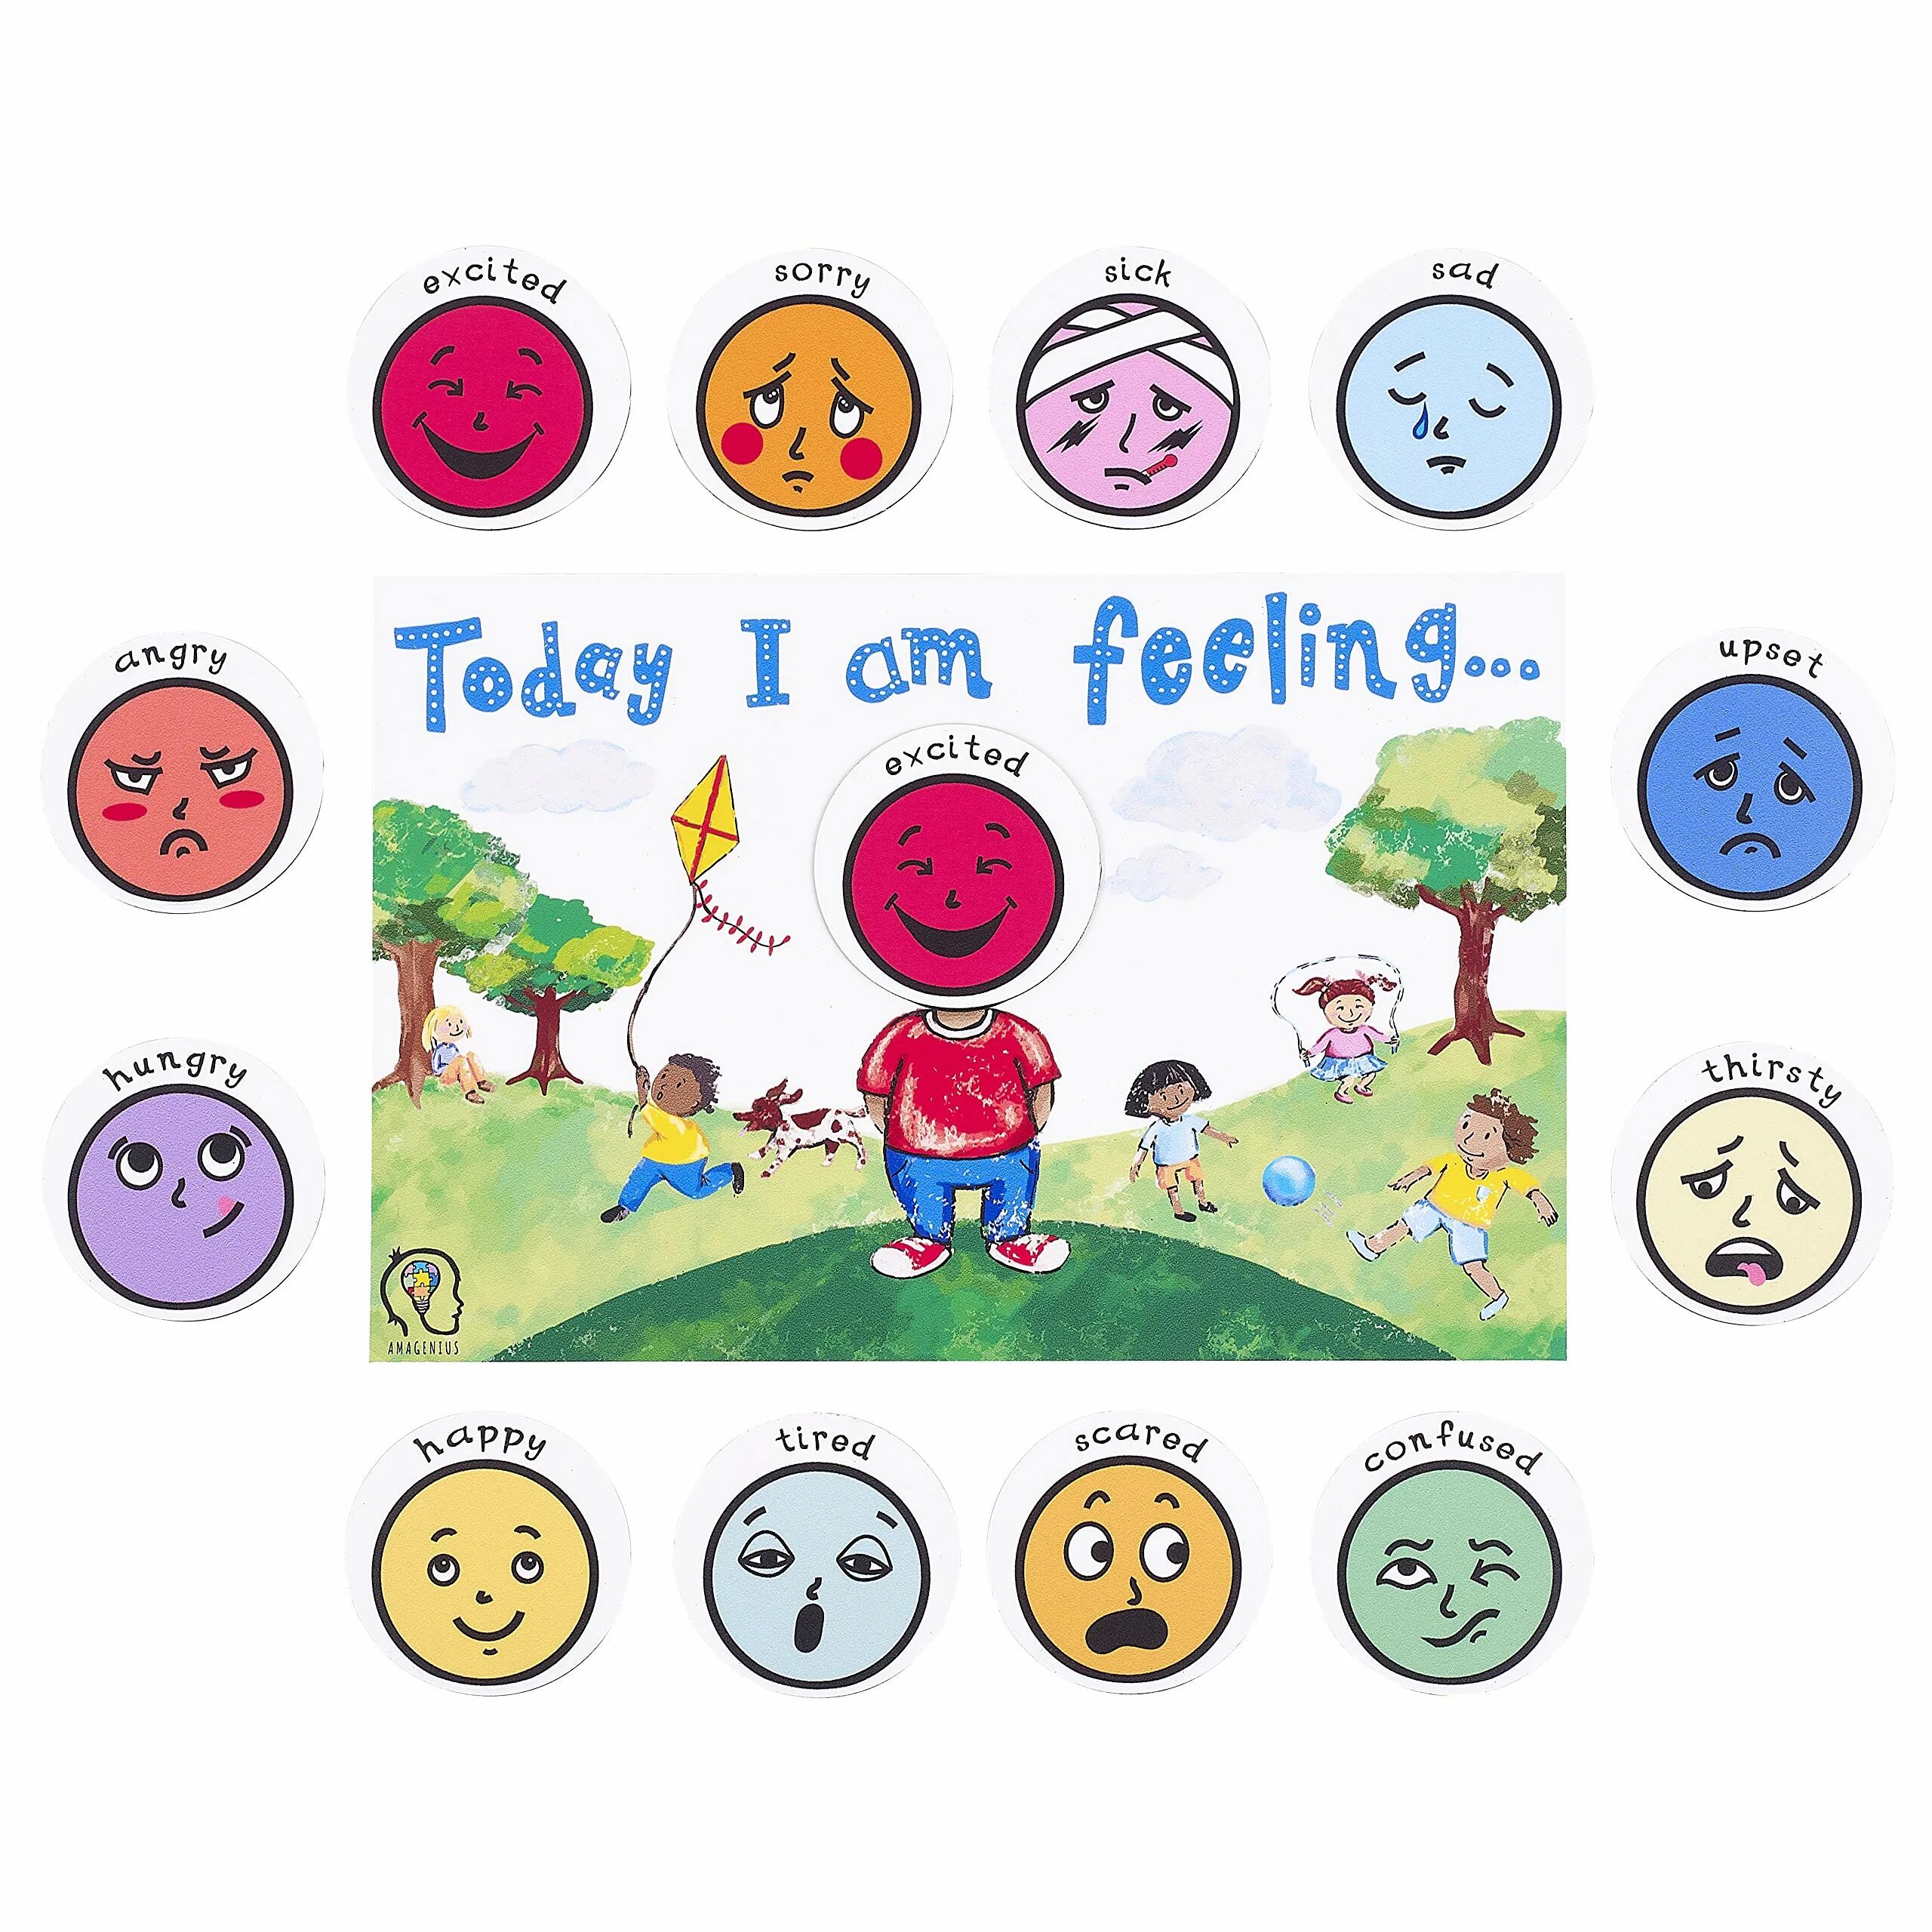 Feelings Chart. Feelings and emotions Flashcards. Feelings Translator. Feelings and emotions column. Www feeling com